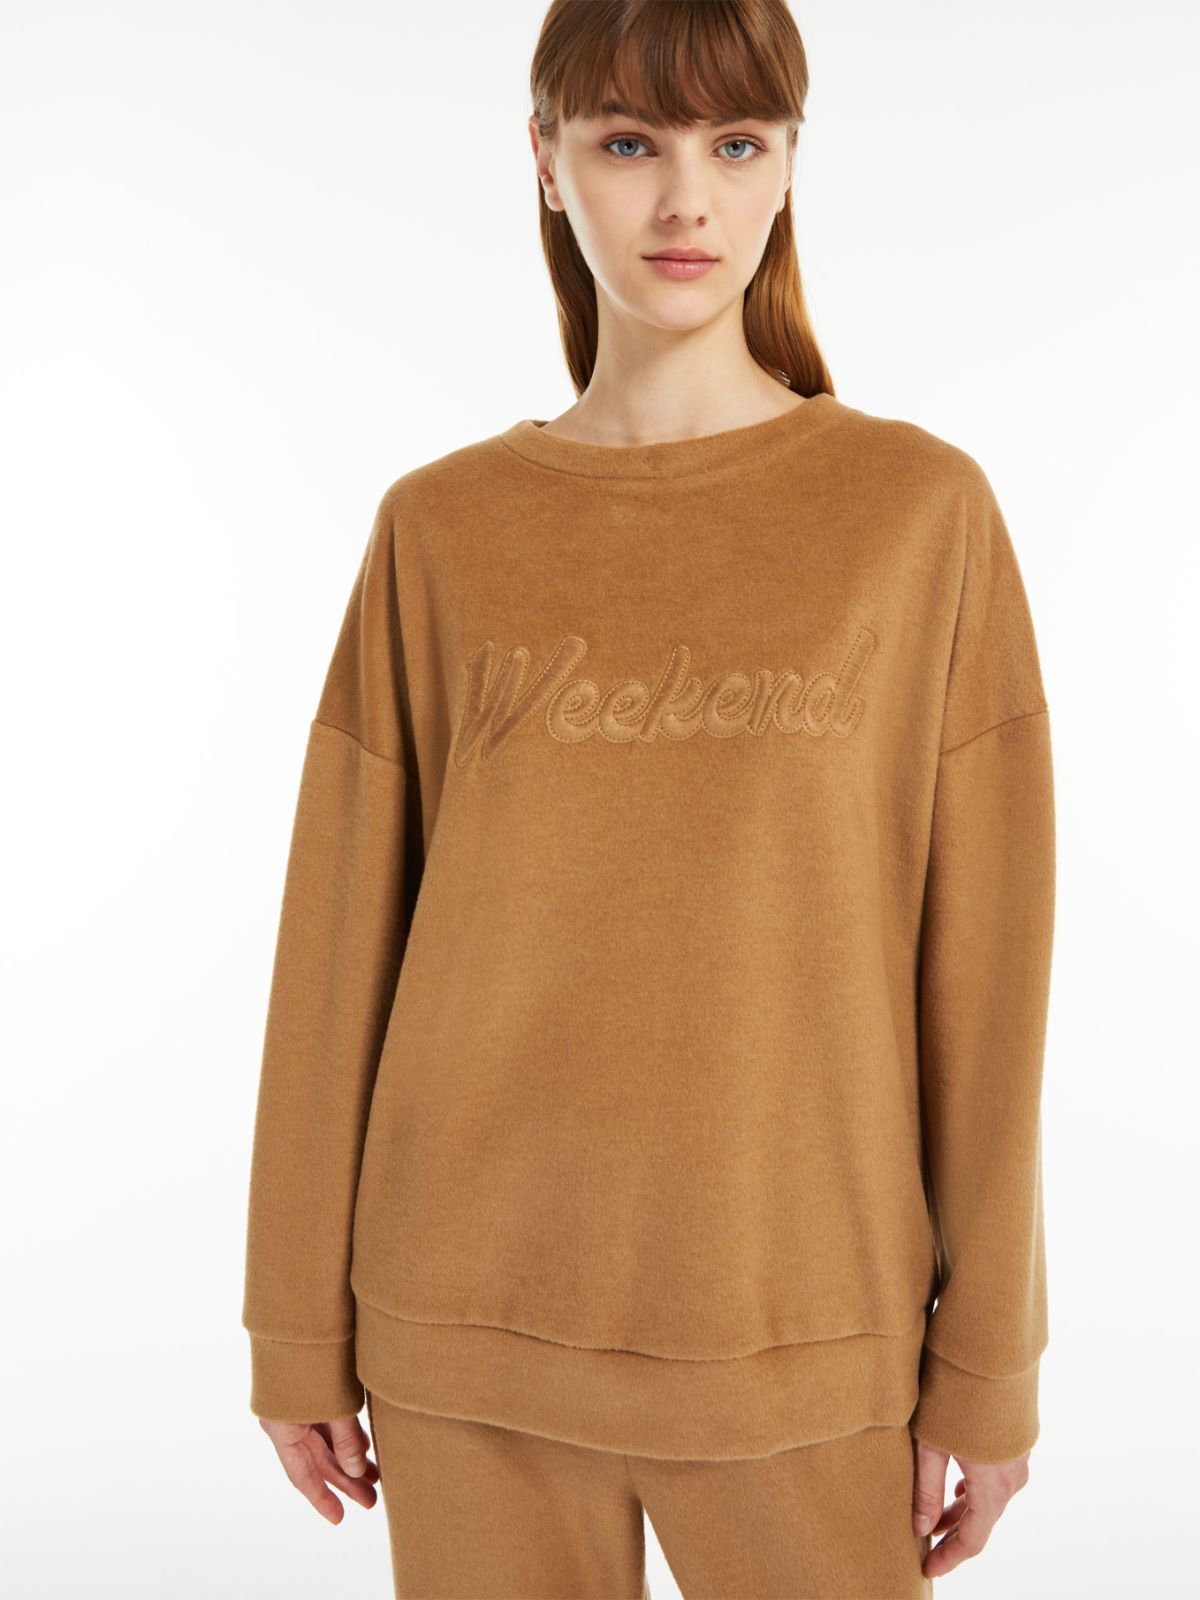 Cotton jersey sweatshirt, camel | Weekend Mara Max